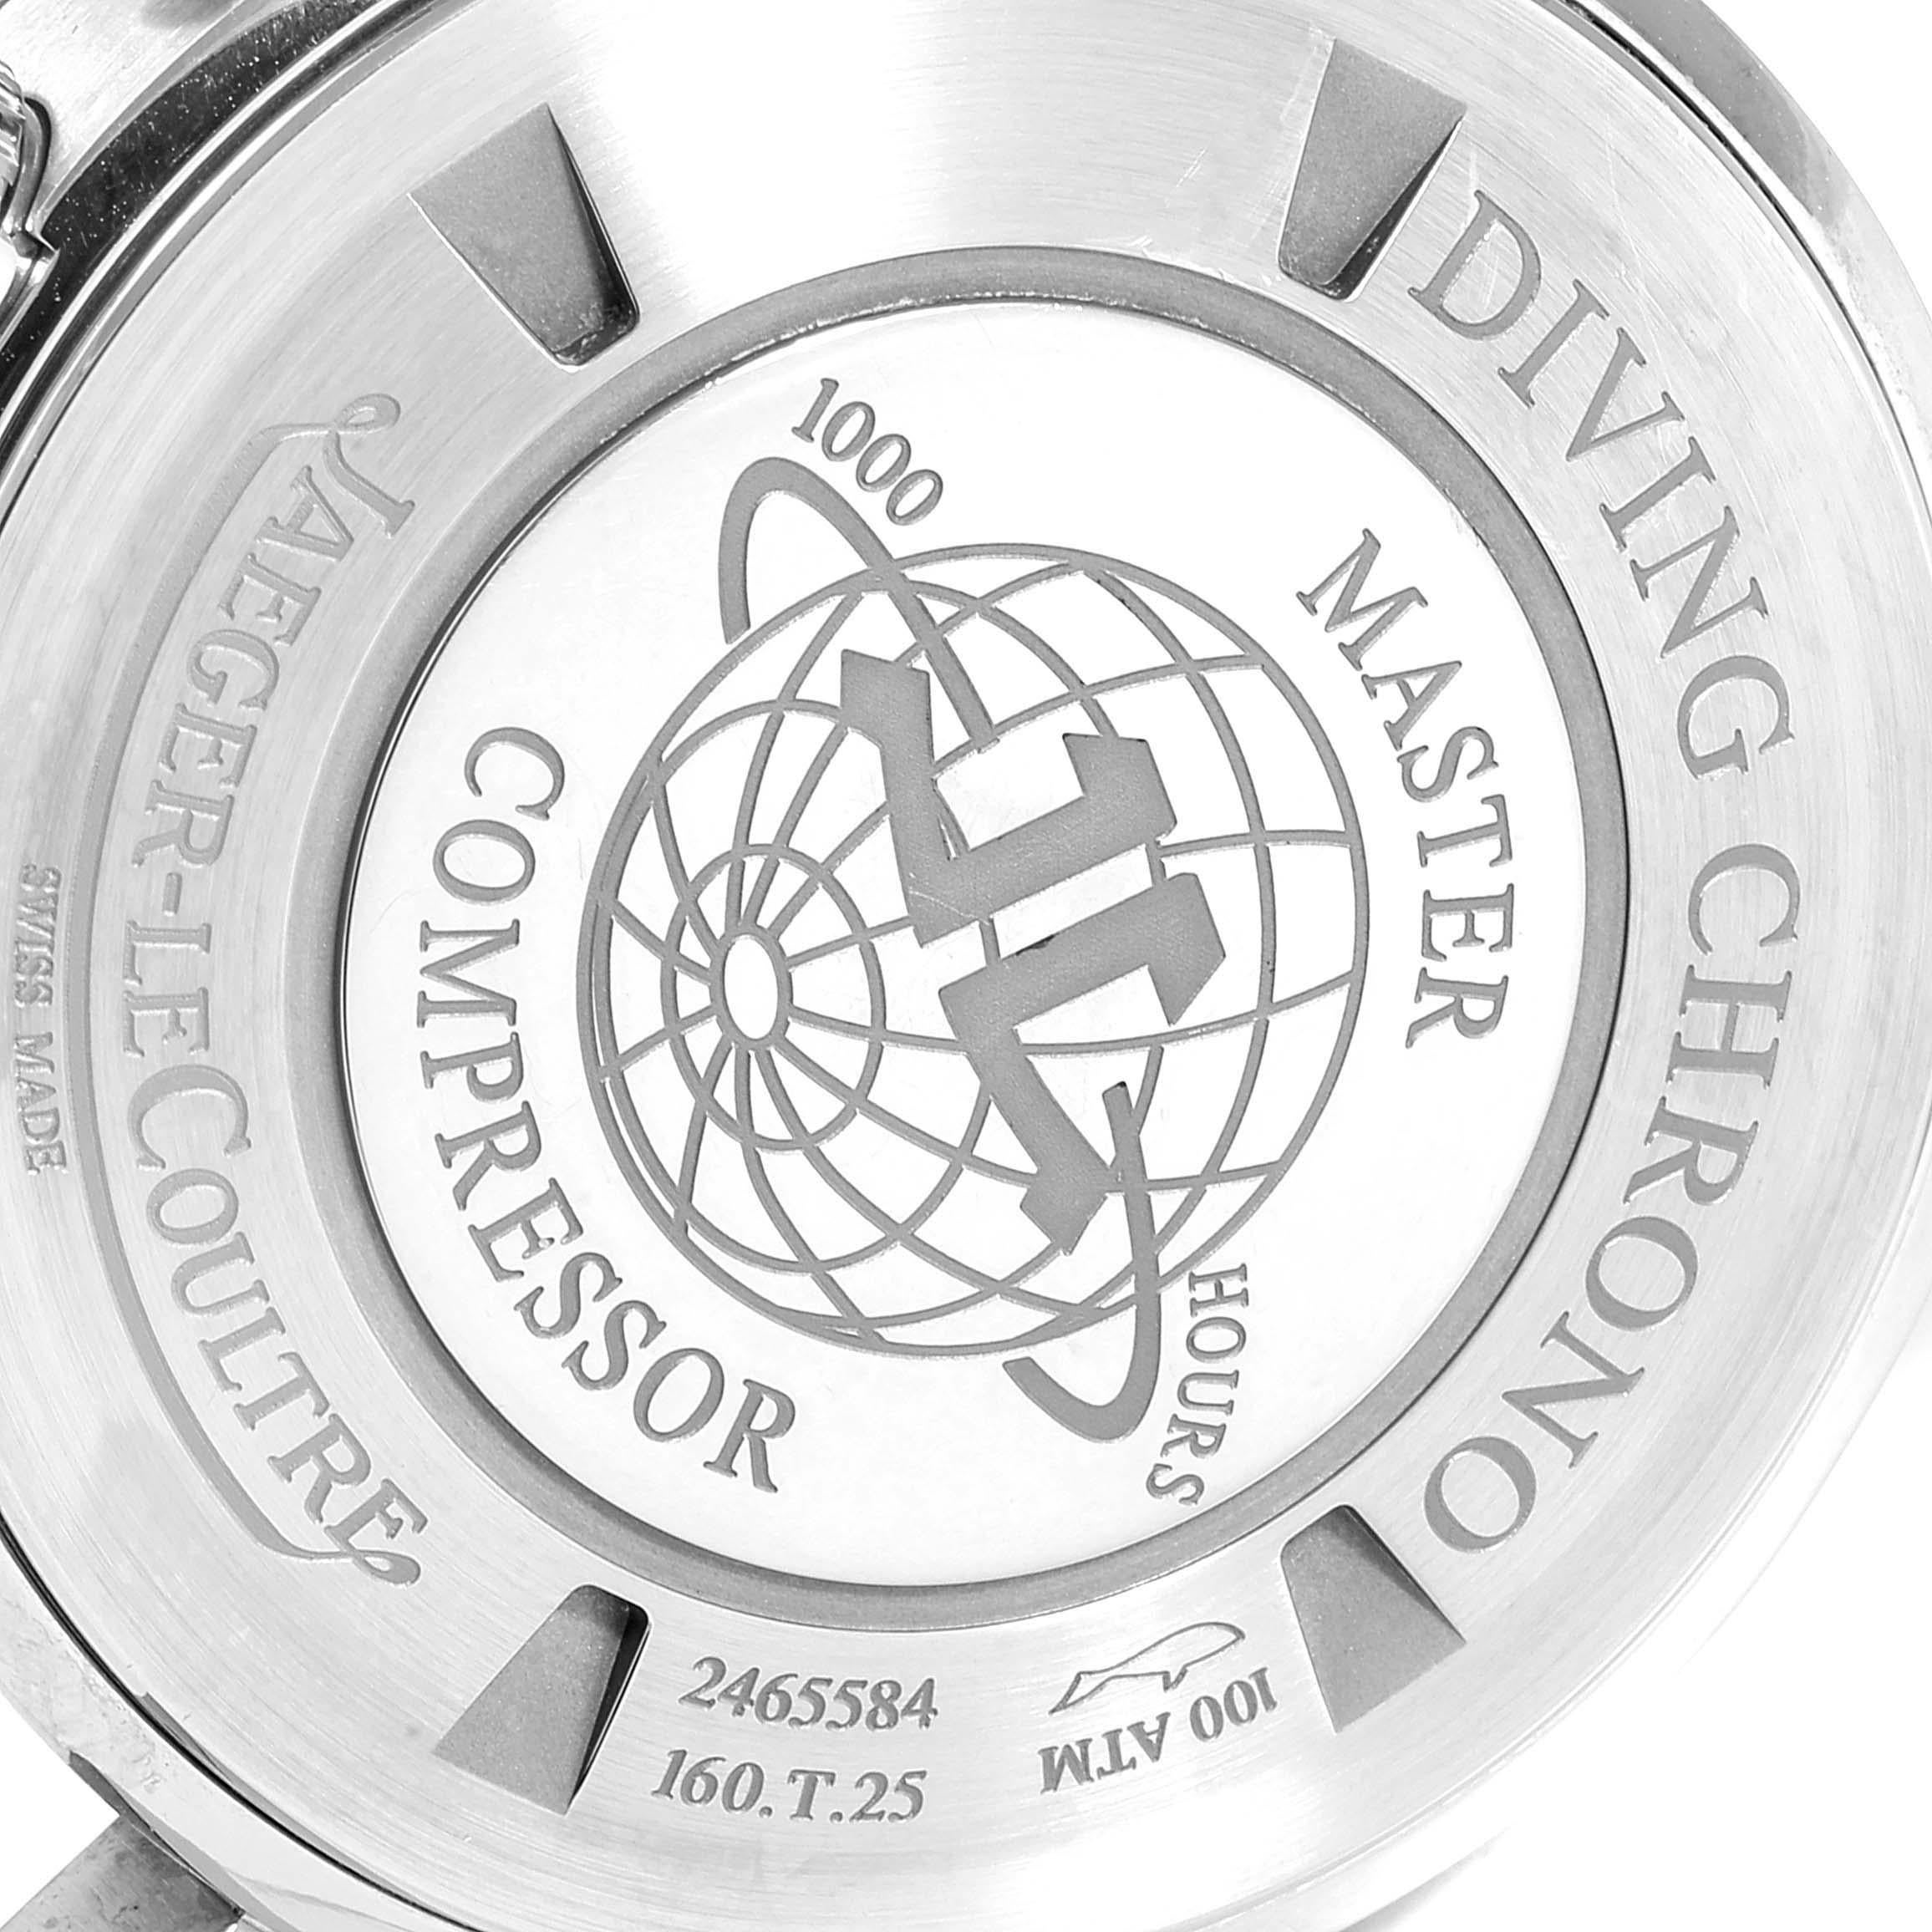 Jaeger-LeCoultre Master Compressor Diving Chrono Titanium Watch 160.T.25 In Excellent Condition For Sale In Atlanta, GA